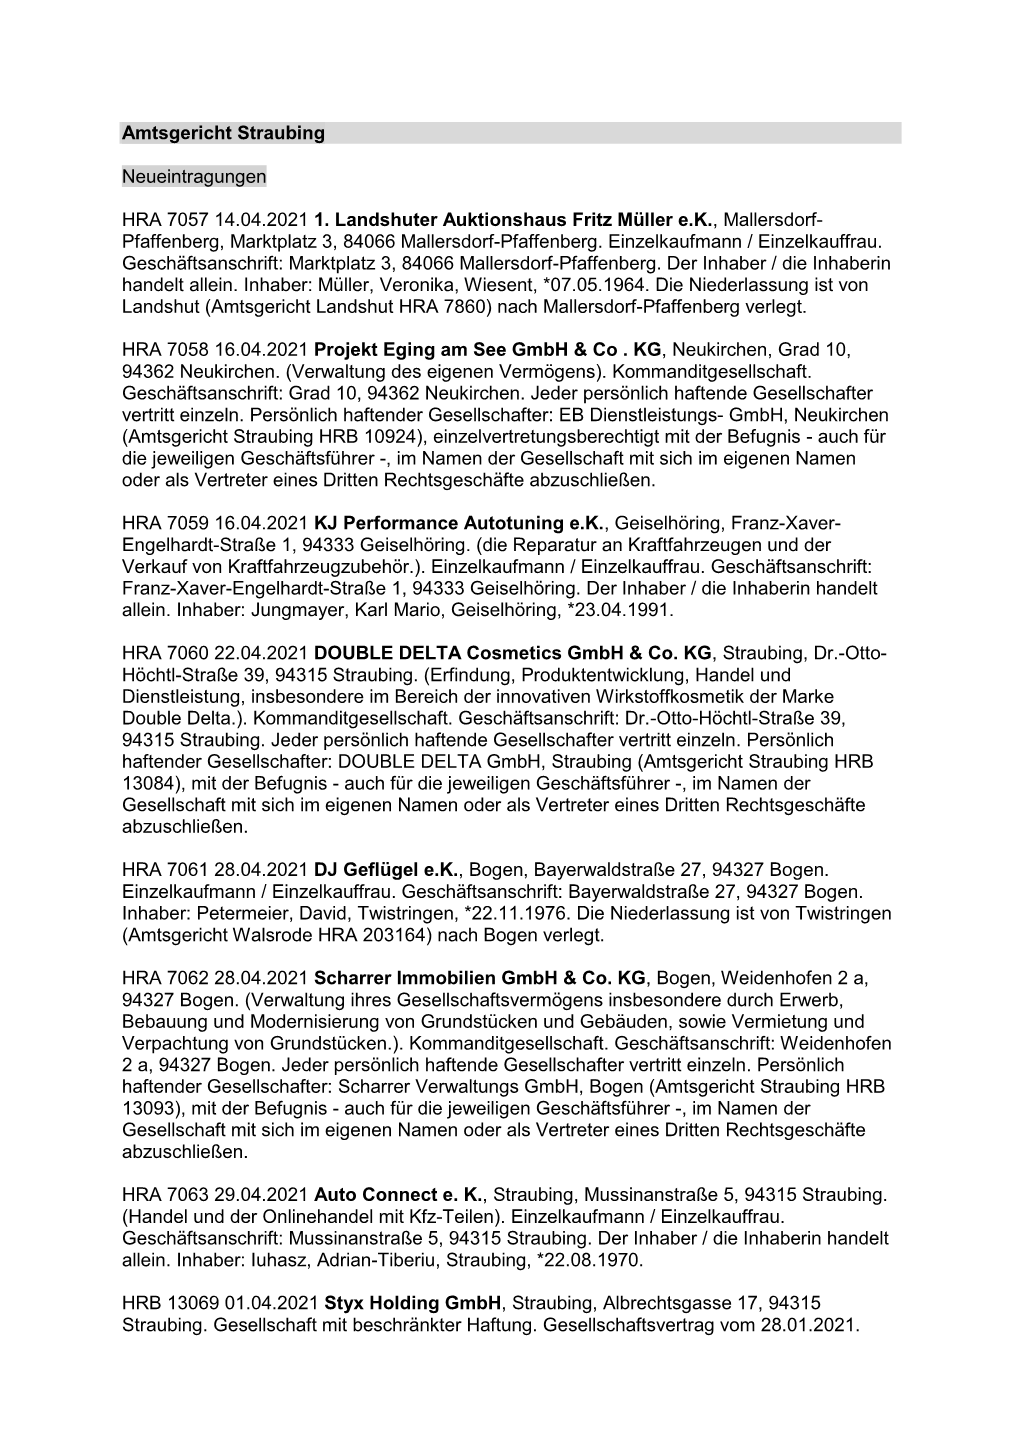 Handelsregister April 2021 Amtsgericht Straubing